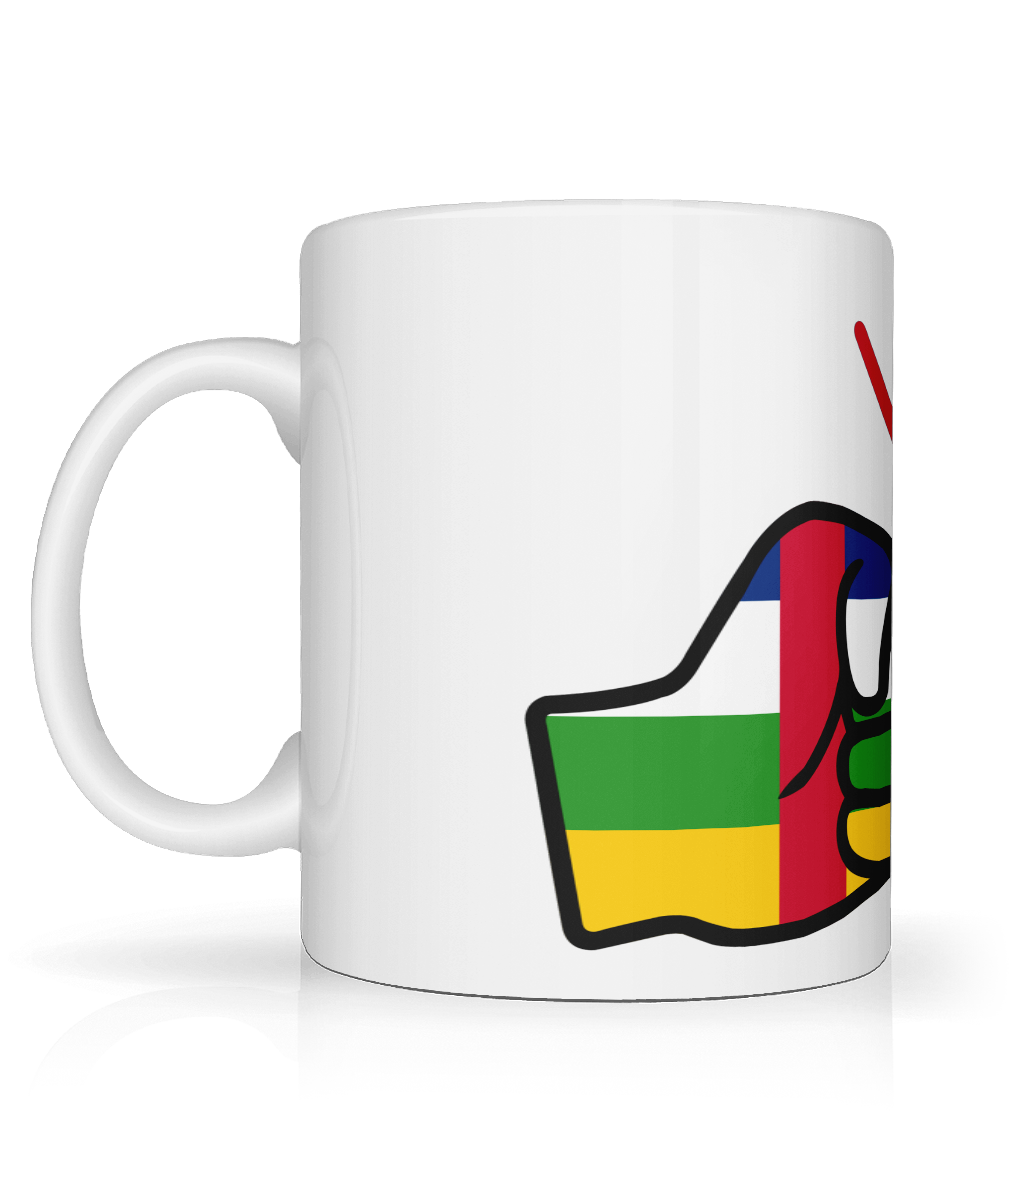 We Run Tings, Central African Republic (CAR), Tea, Coffee Ceramic Mug, Cup, White, 11oz